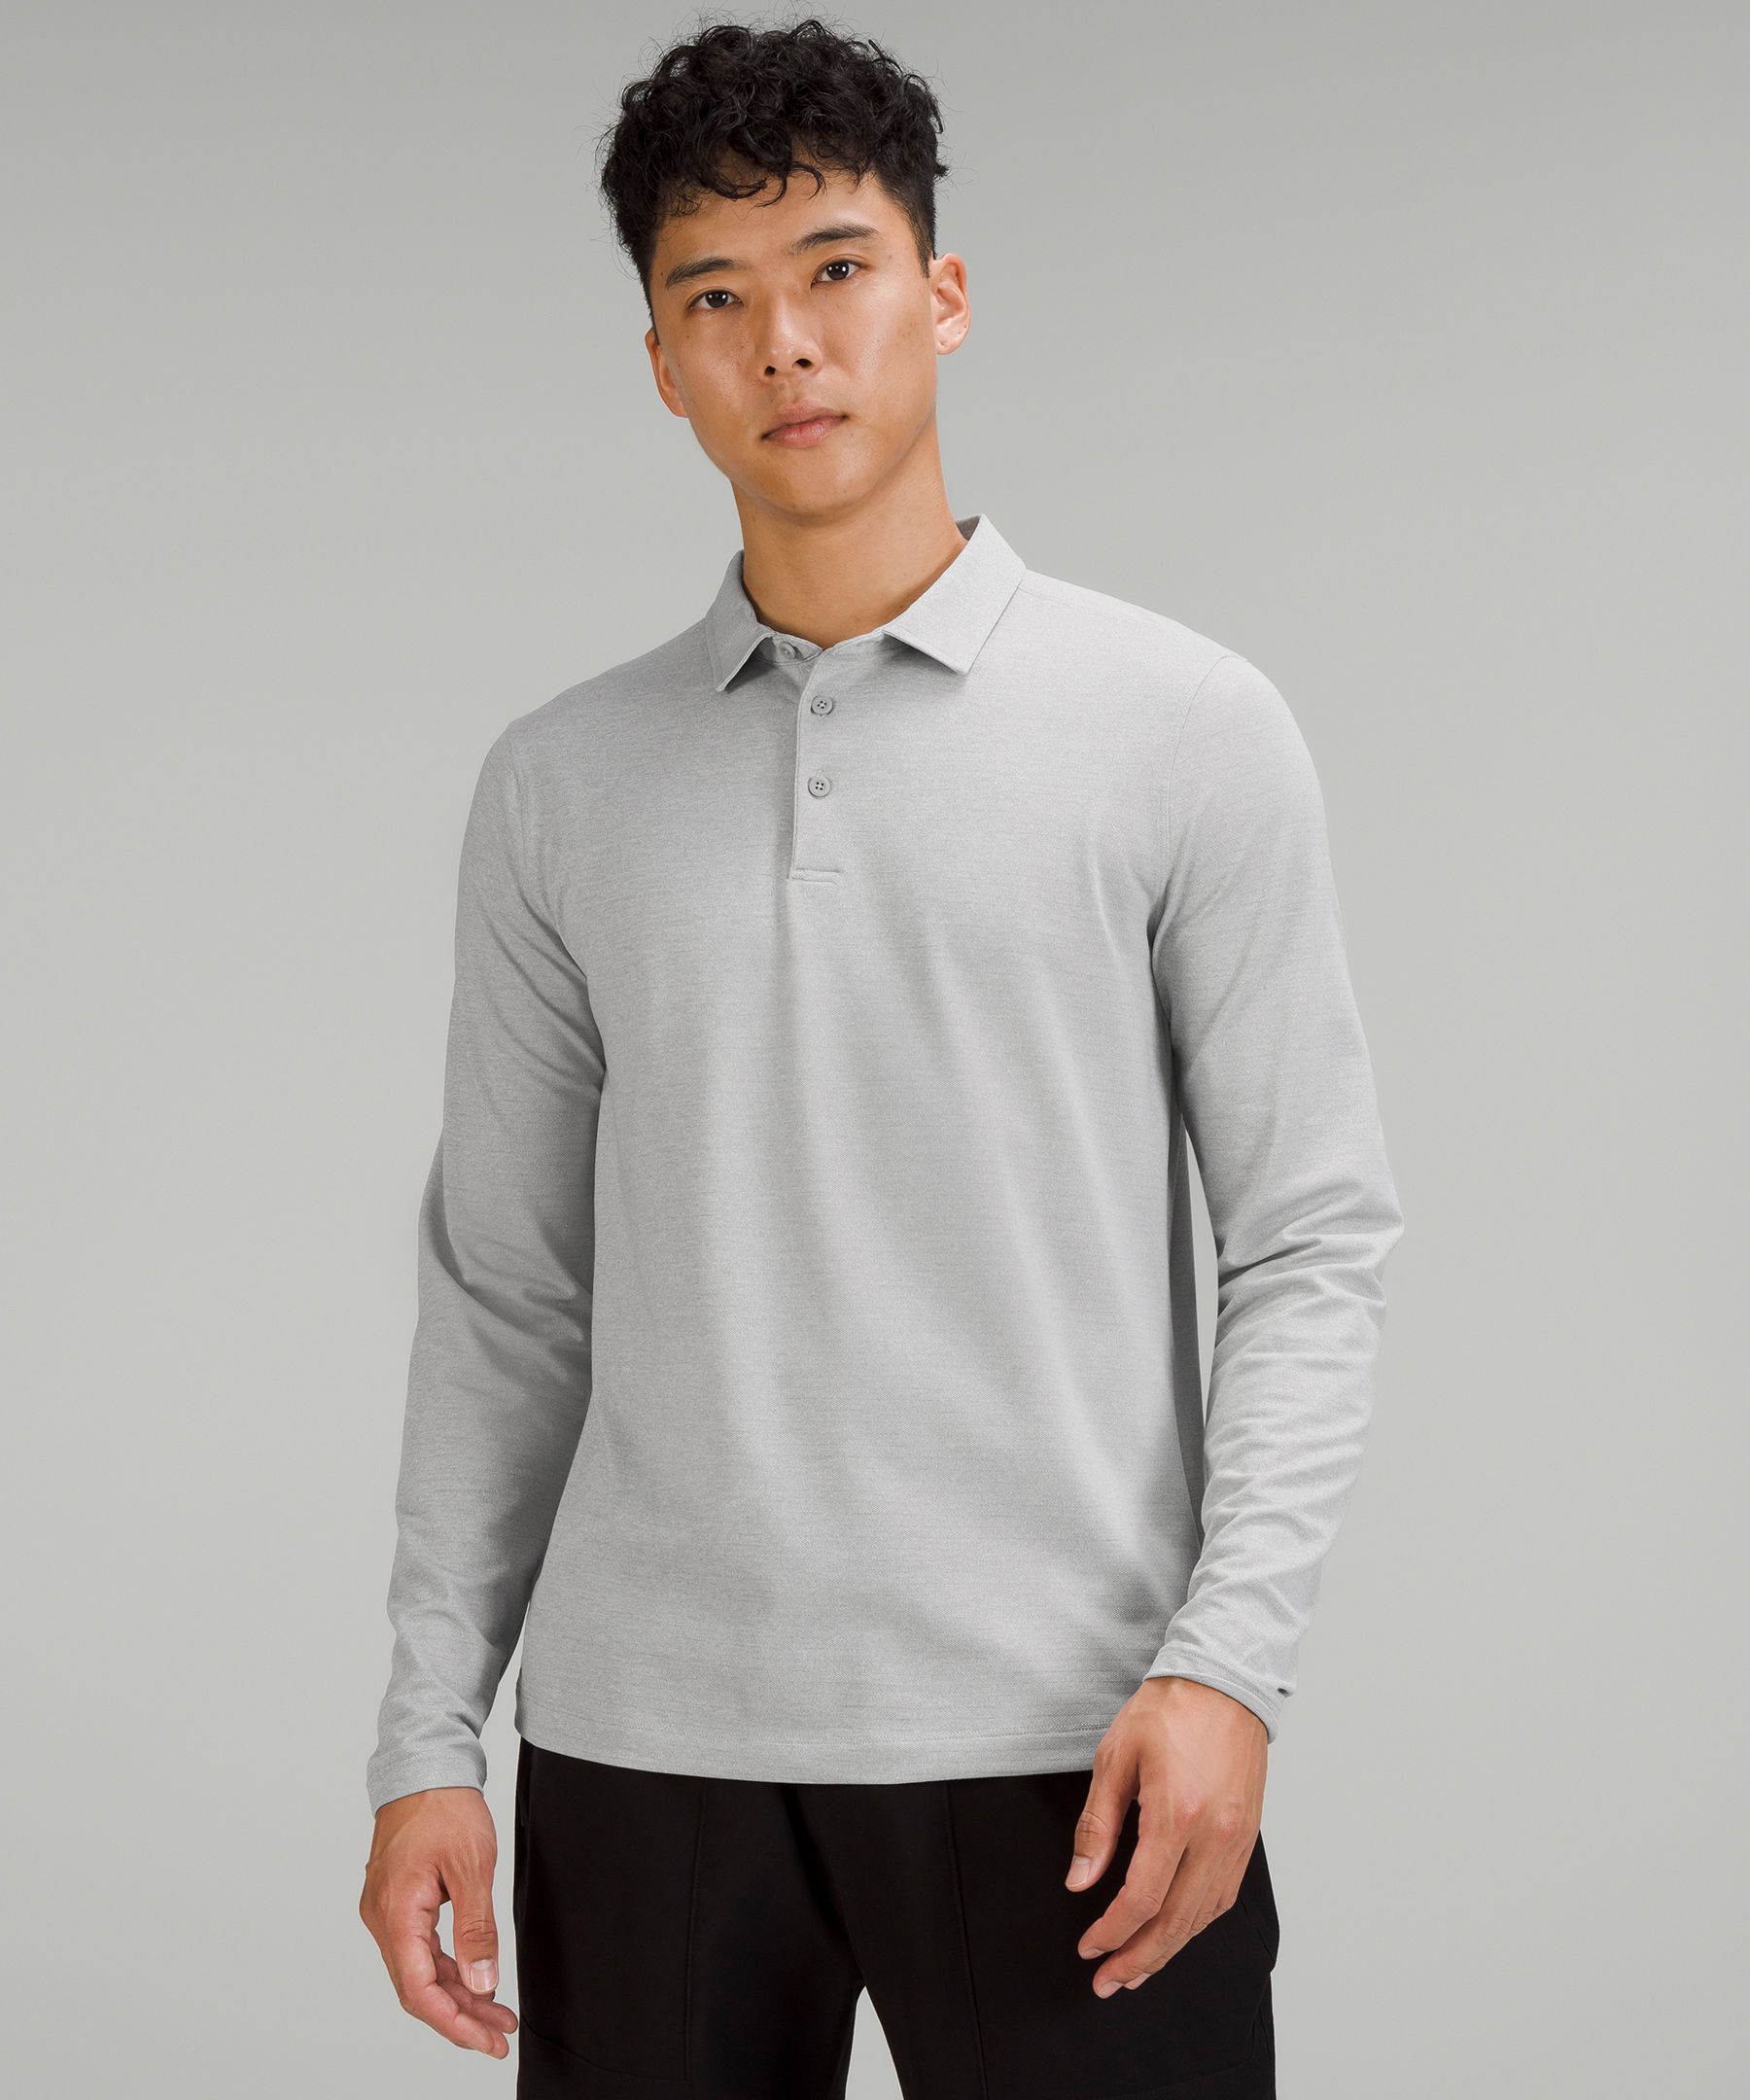 Lululemon Evolution Long Sleeve Polo Shirt Pique Fabric